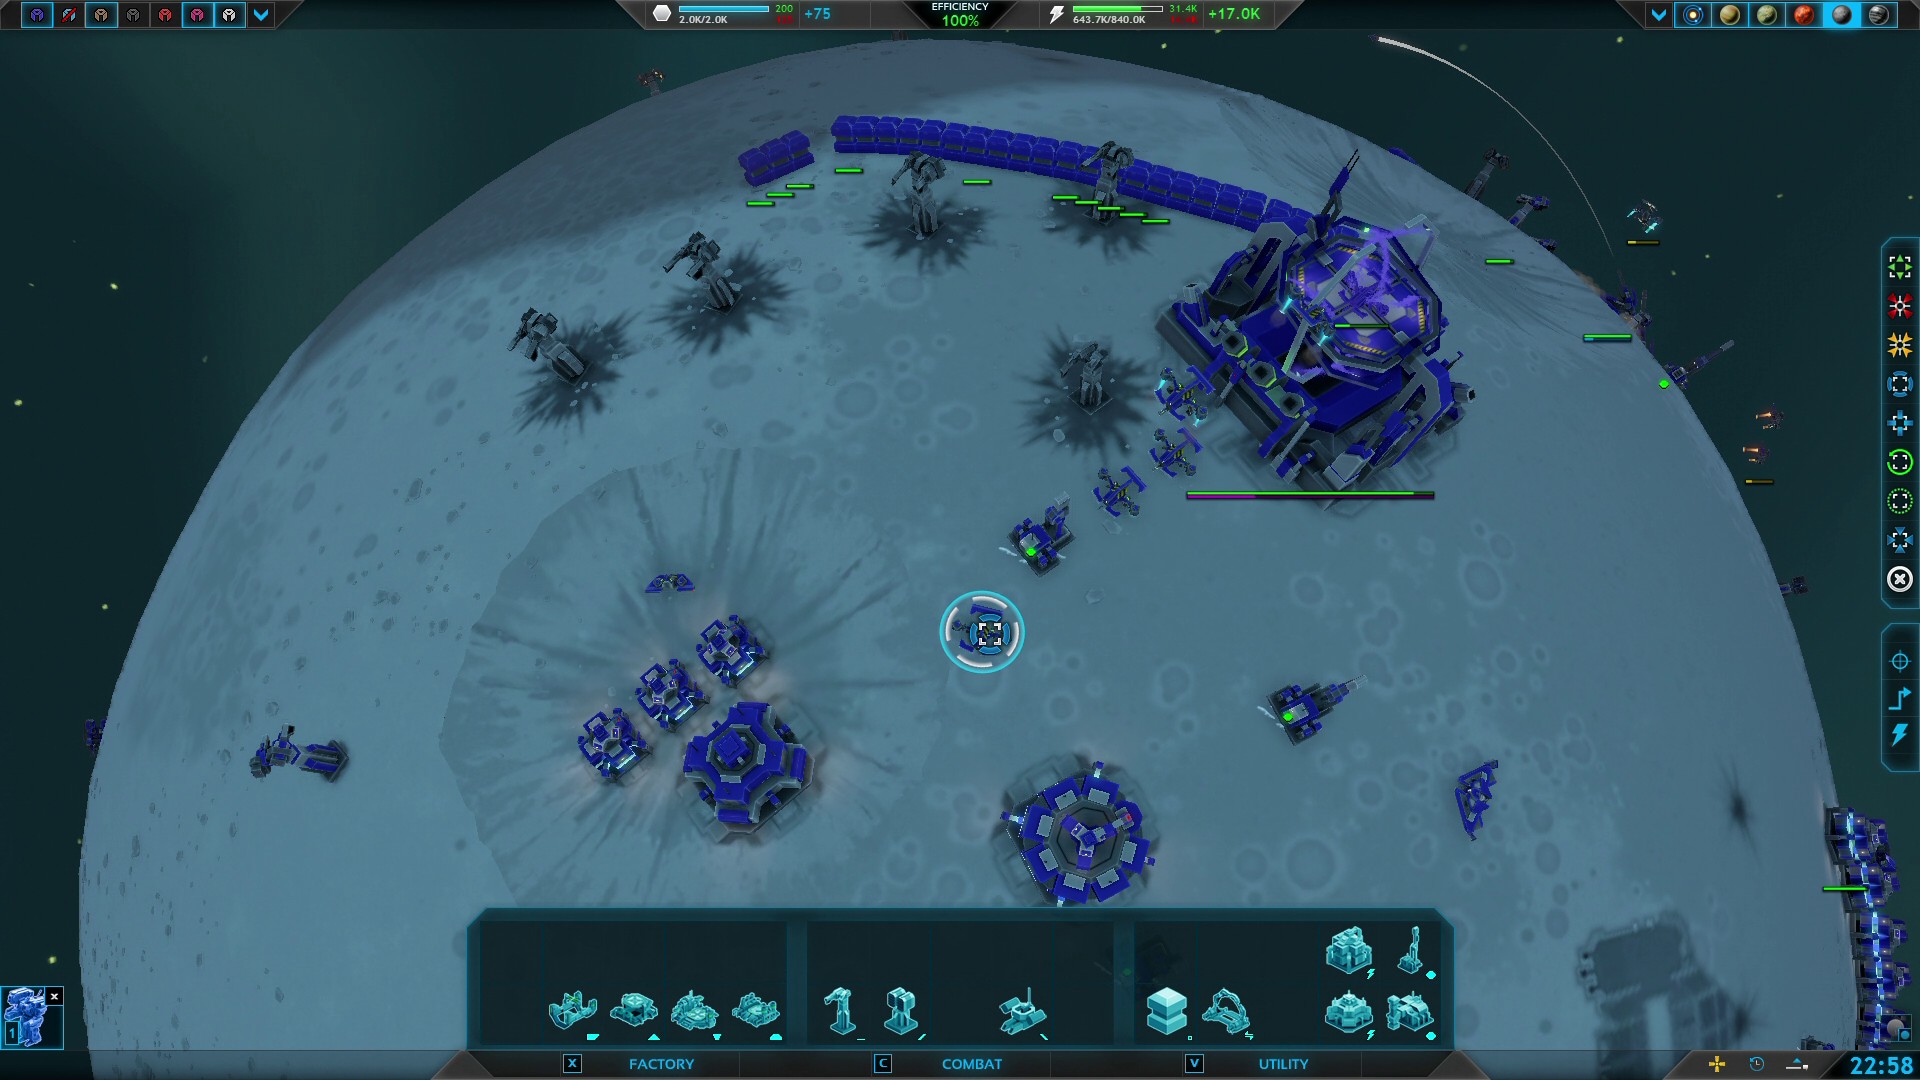 planetary-annihilation-screenshot